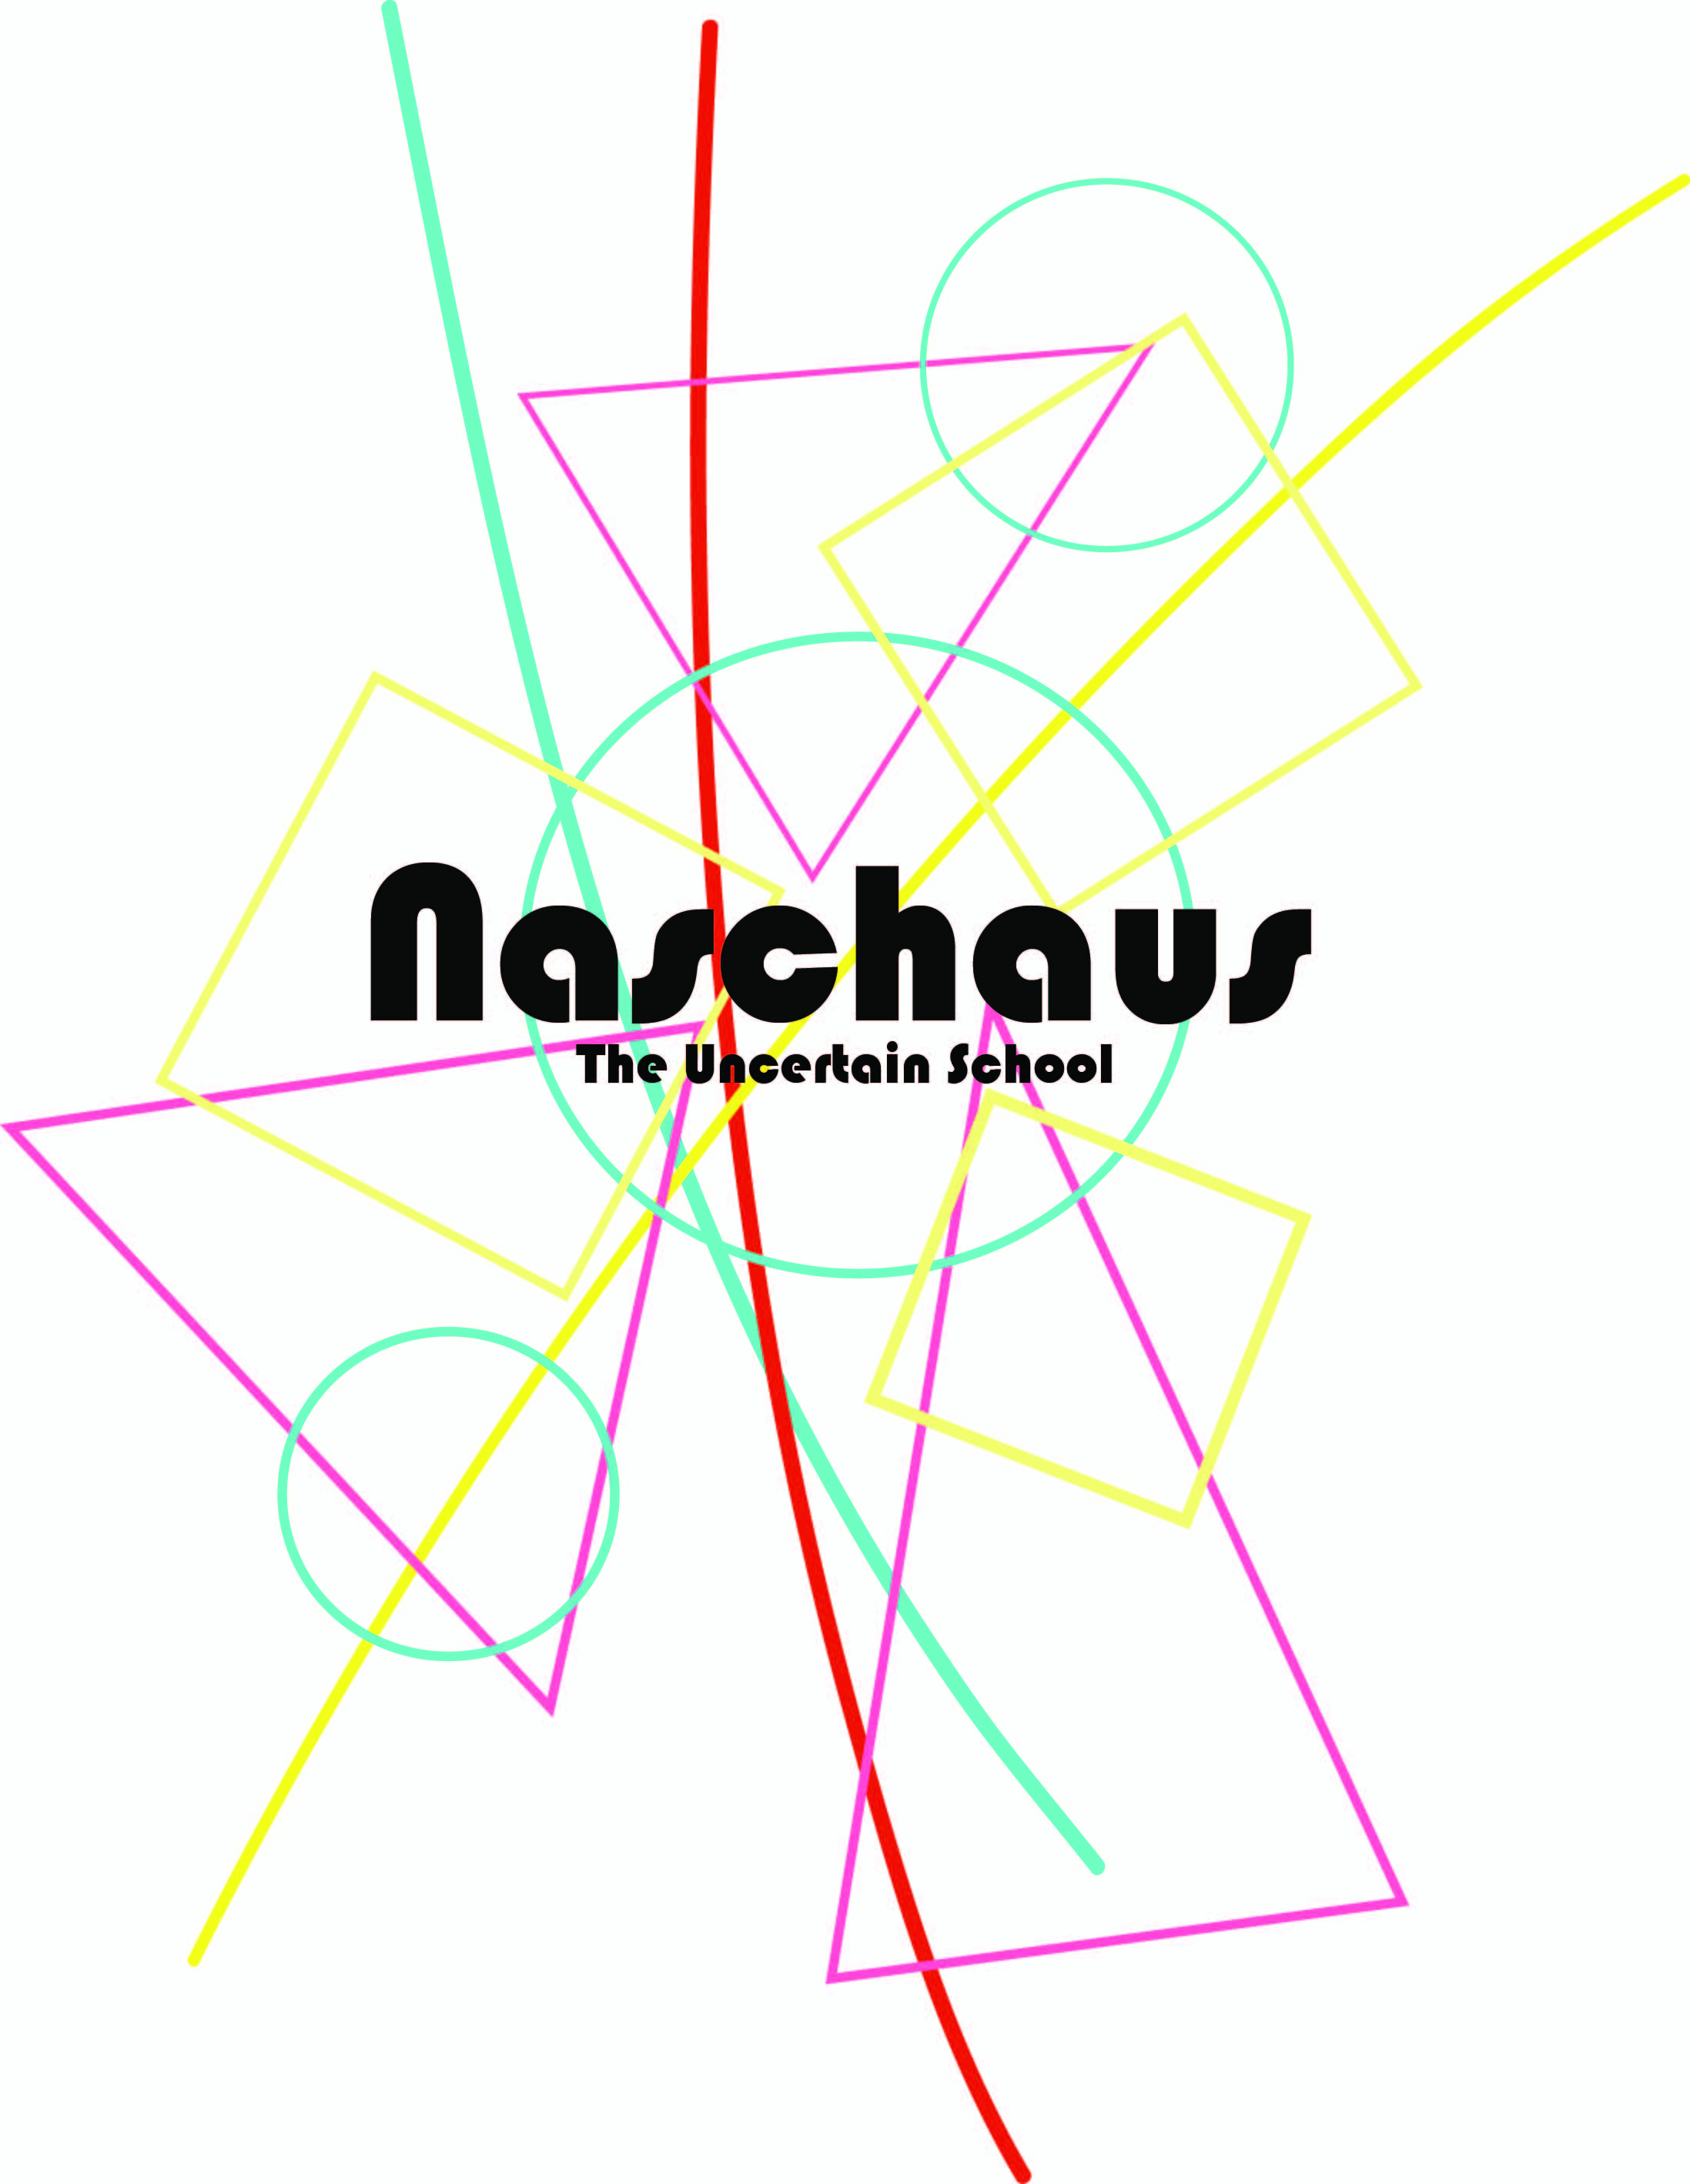 Naschaus: The Uncertain School logo